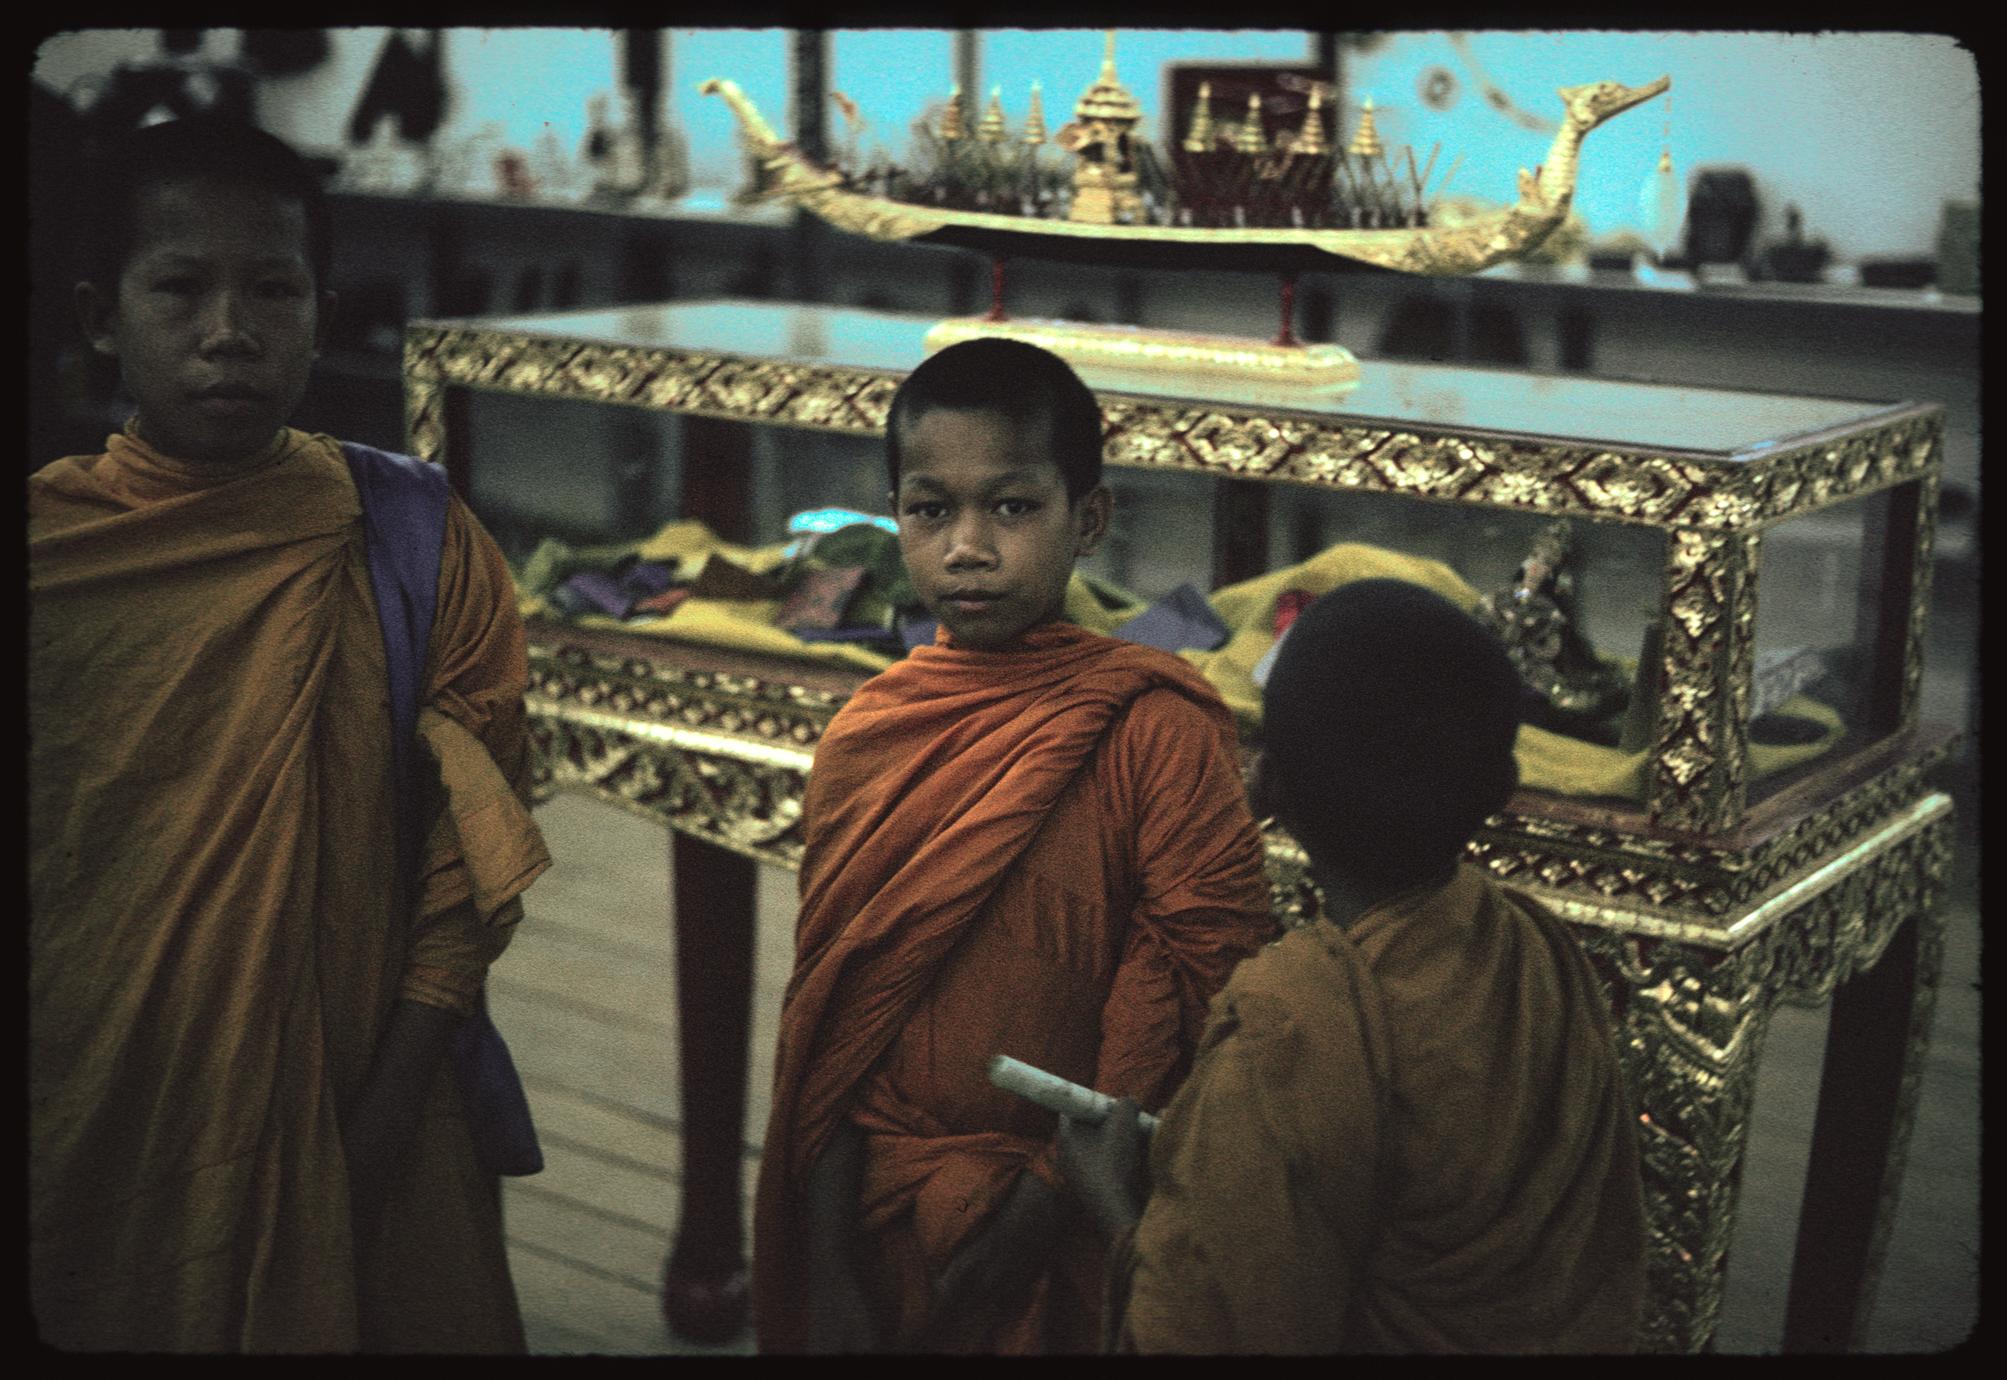 That Luang fair : Thai exhibit